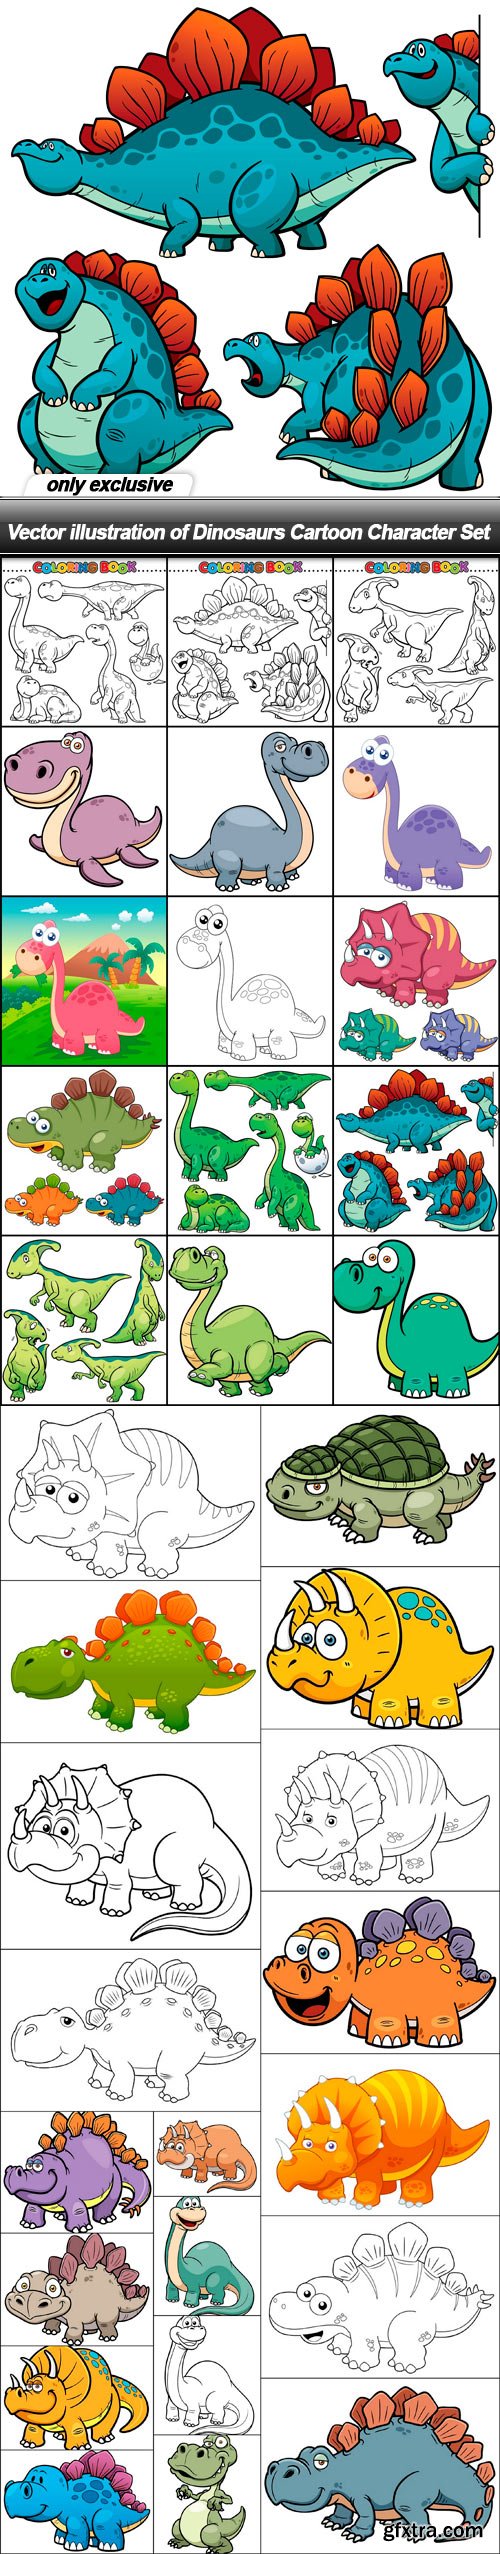 Vector illustration of Dinosaurs Cartoon Character Set - 34 EPS